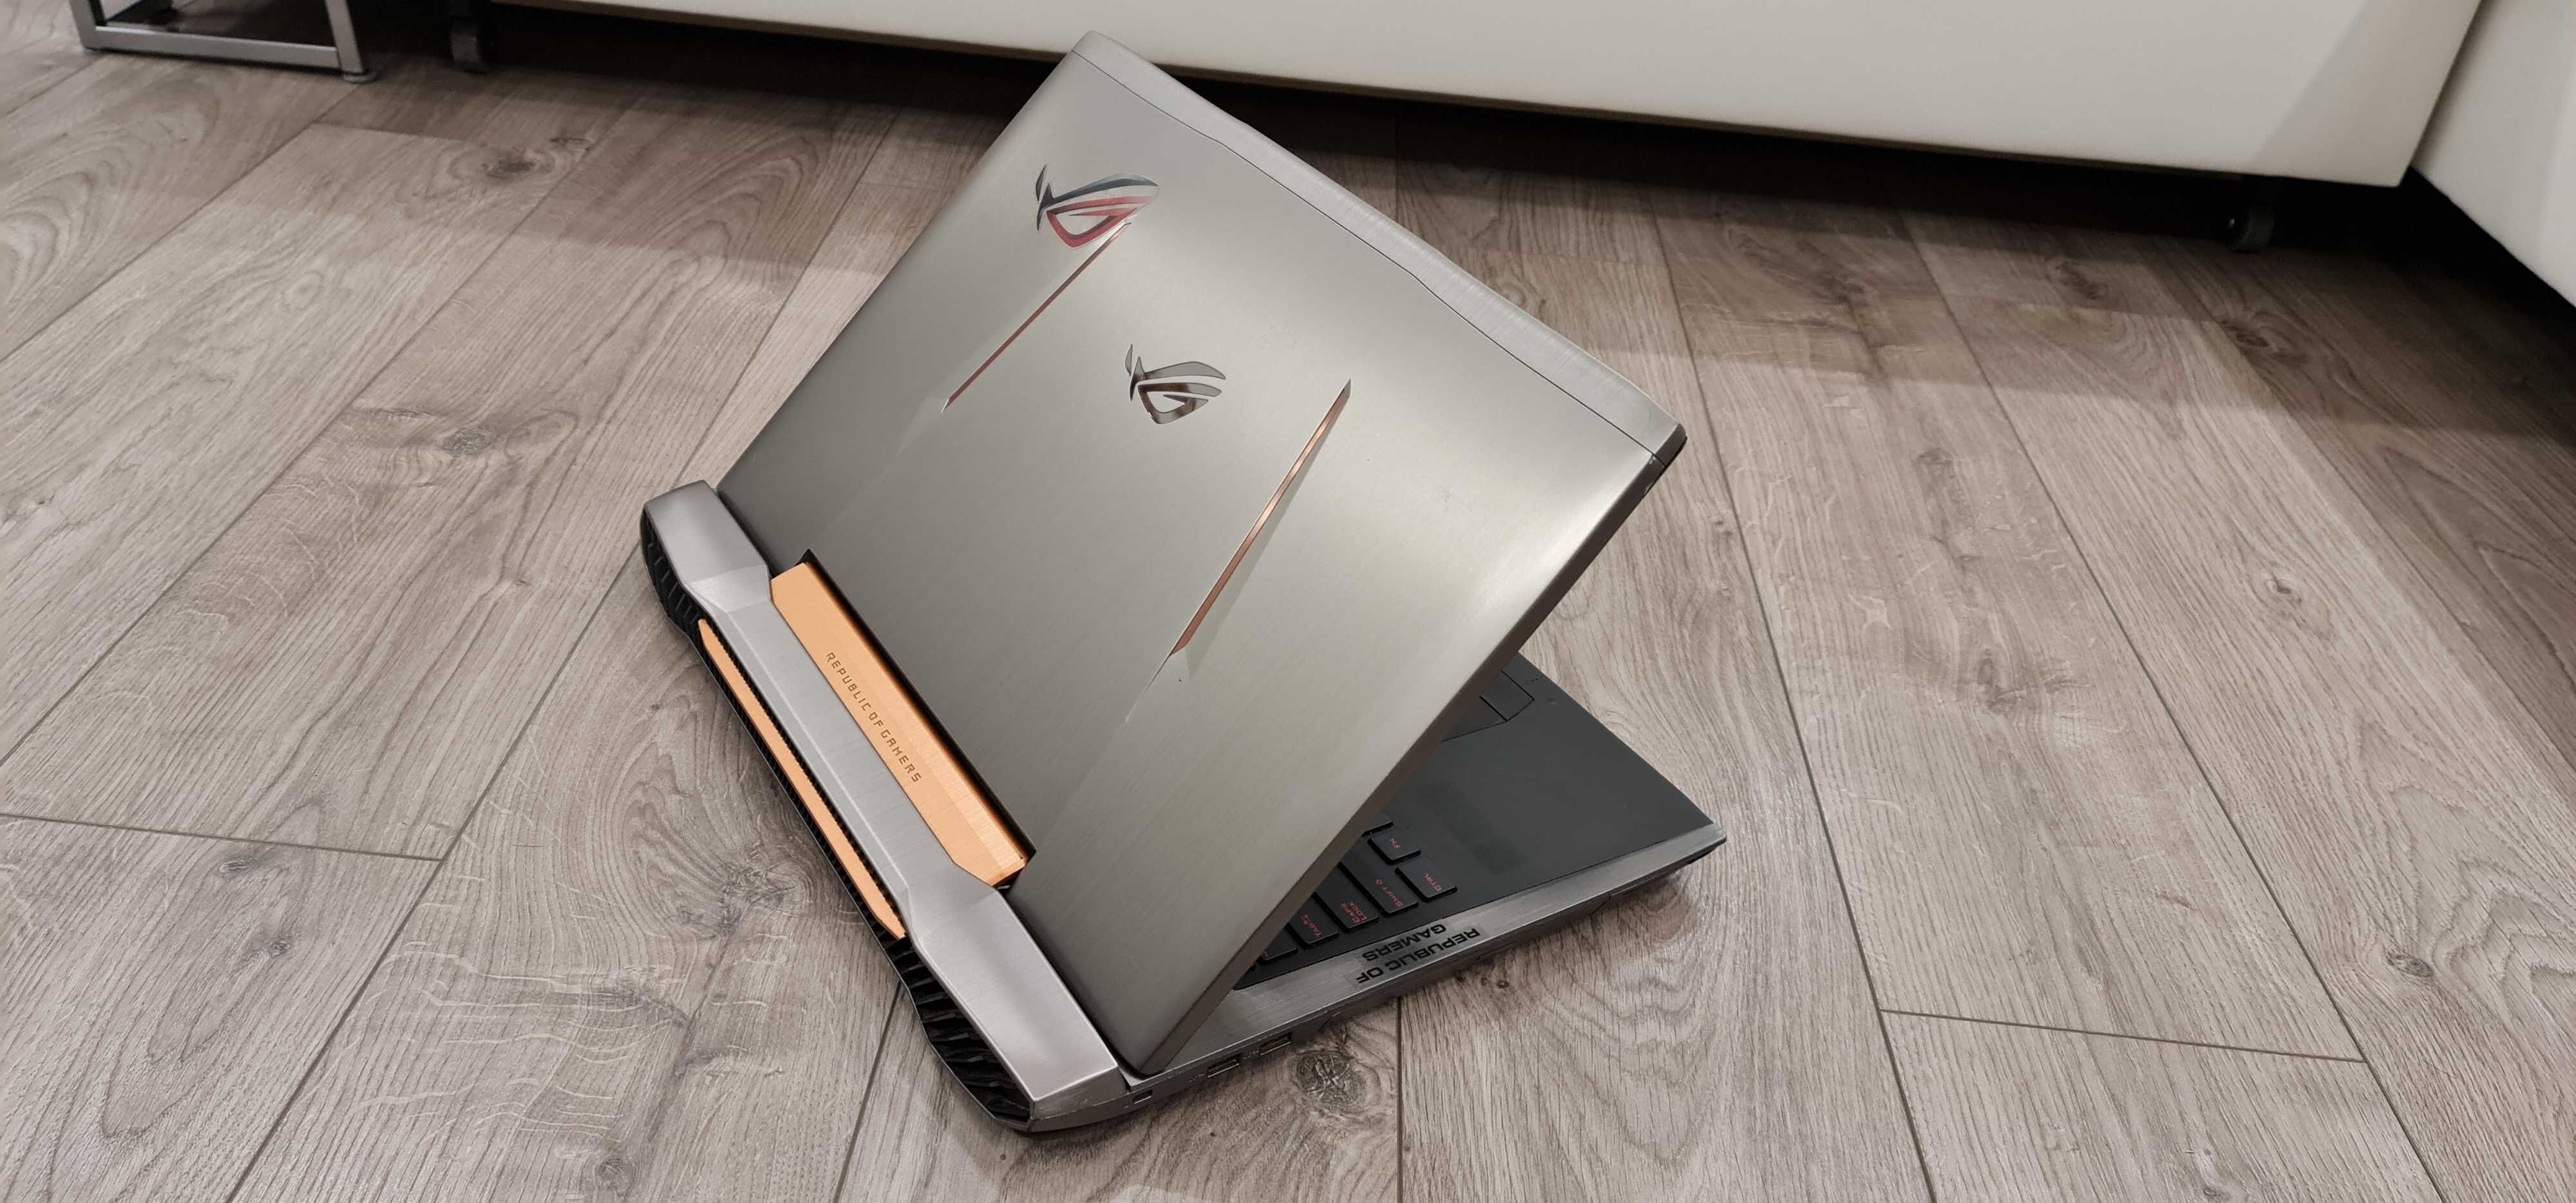 Laptop gaming Asus Rog , intel core i7- video 6 gb nvidia ,17,3 inch